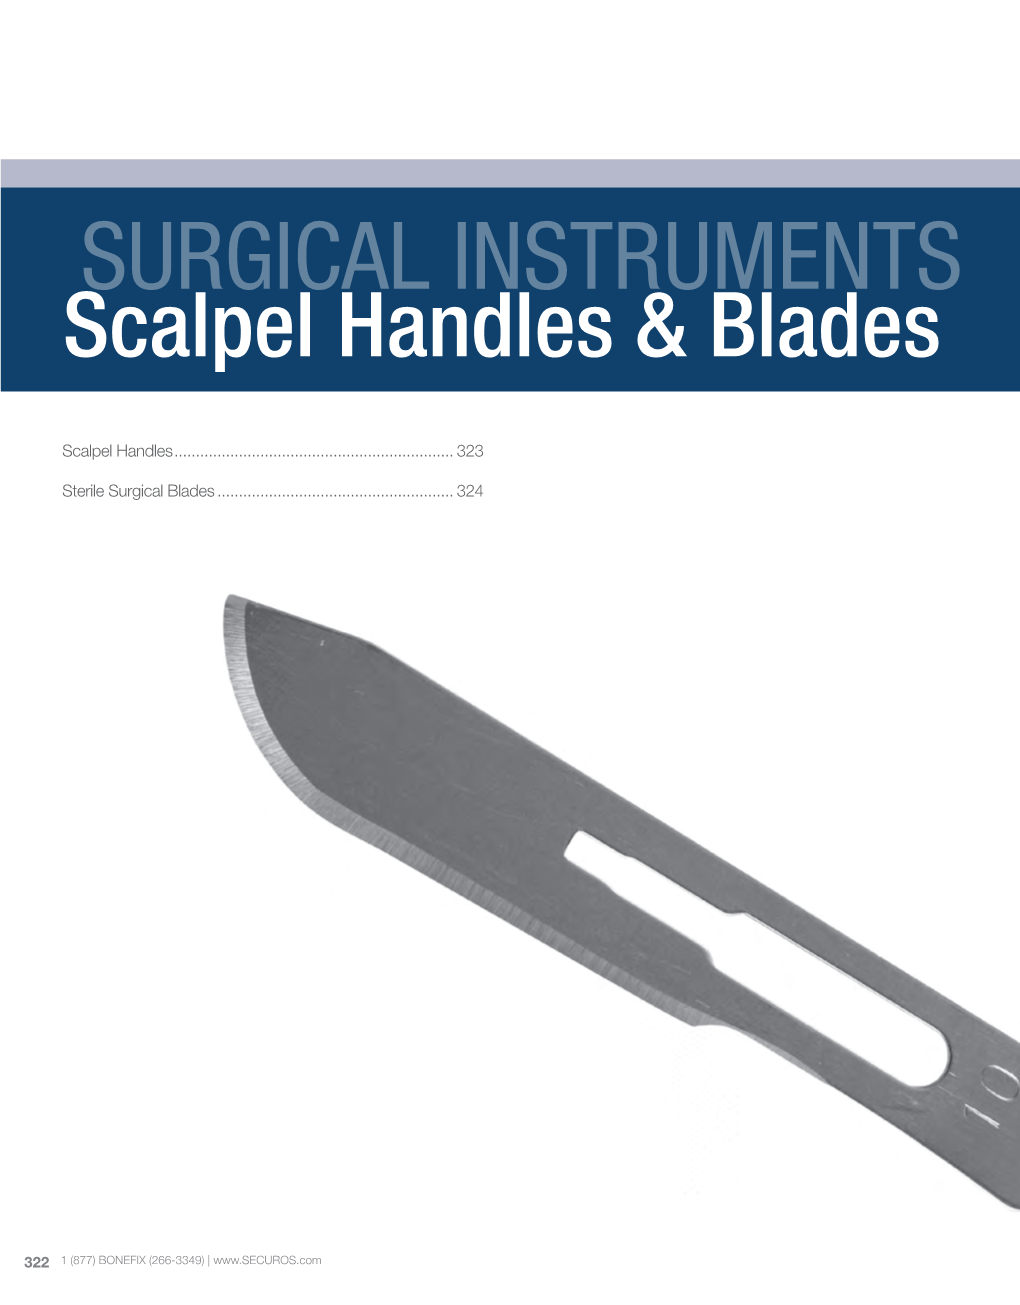 SURGICAL INSTRUMENTS Scalpel Handles & Blades